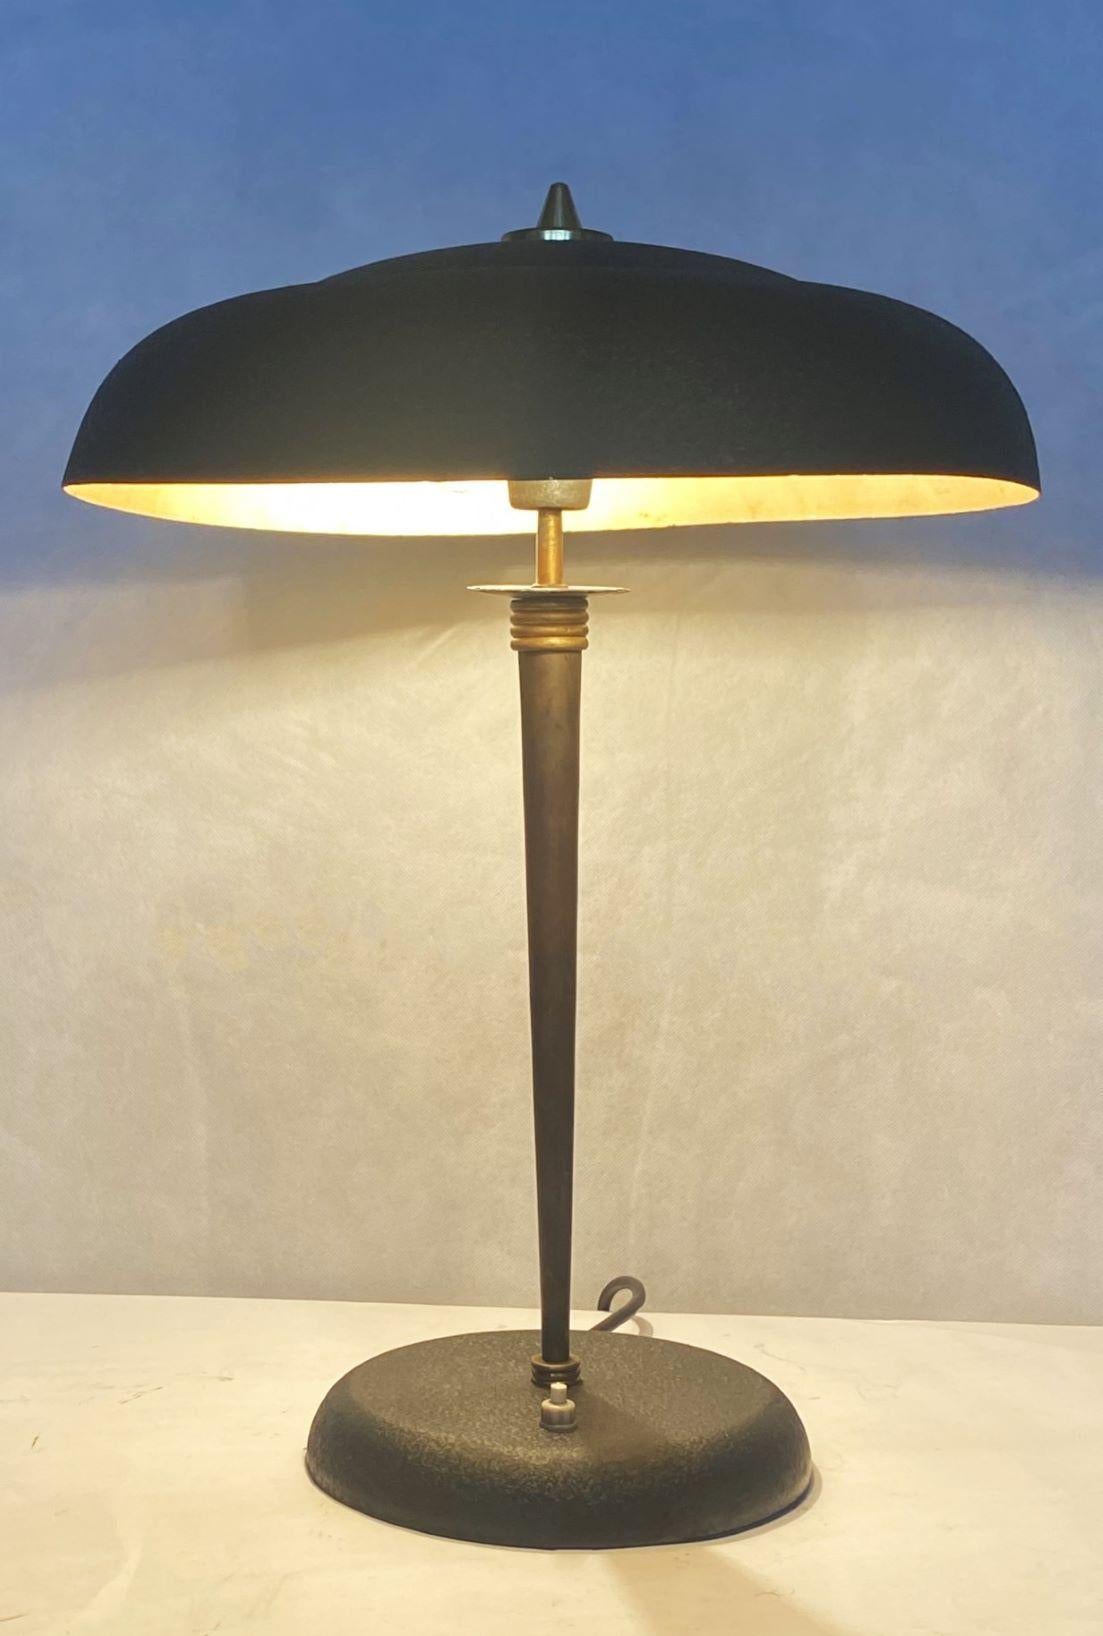 Midcentury Stilnovo Desk or Table Lamp Brass Black Enameled Metal, Iataly, 1950s In Good Condition For Sale In Frankfurt am Main, DE